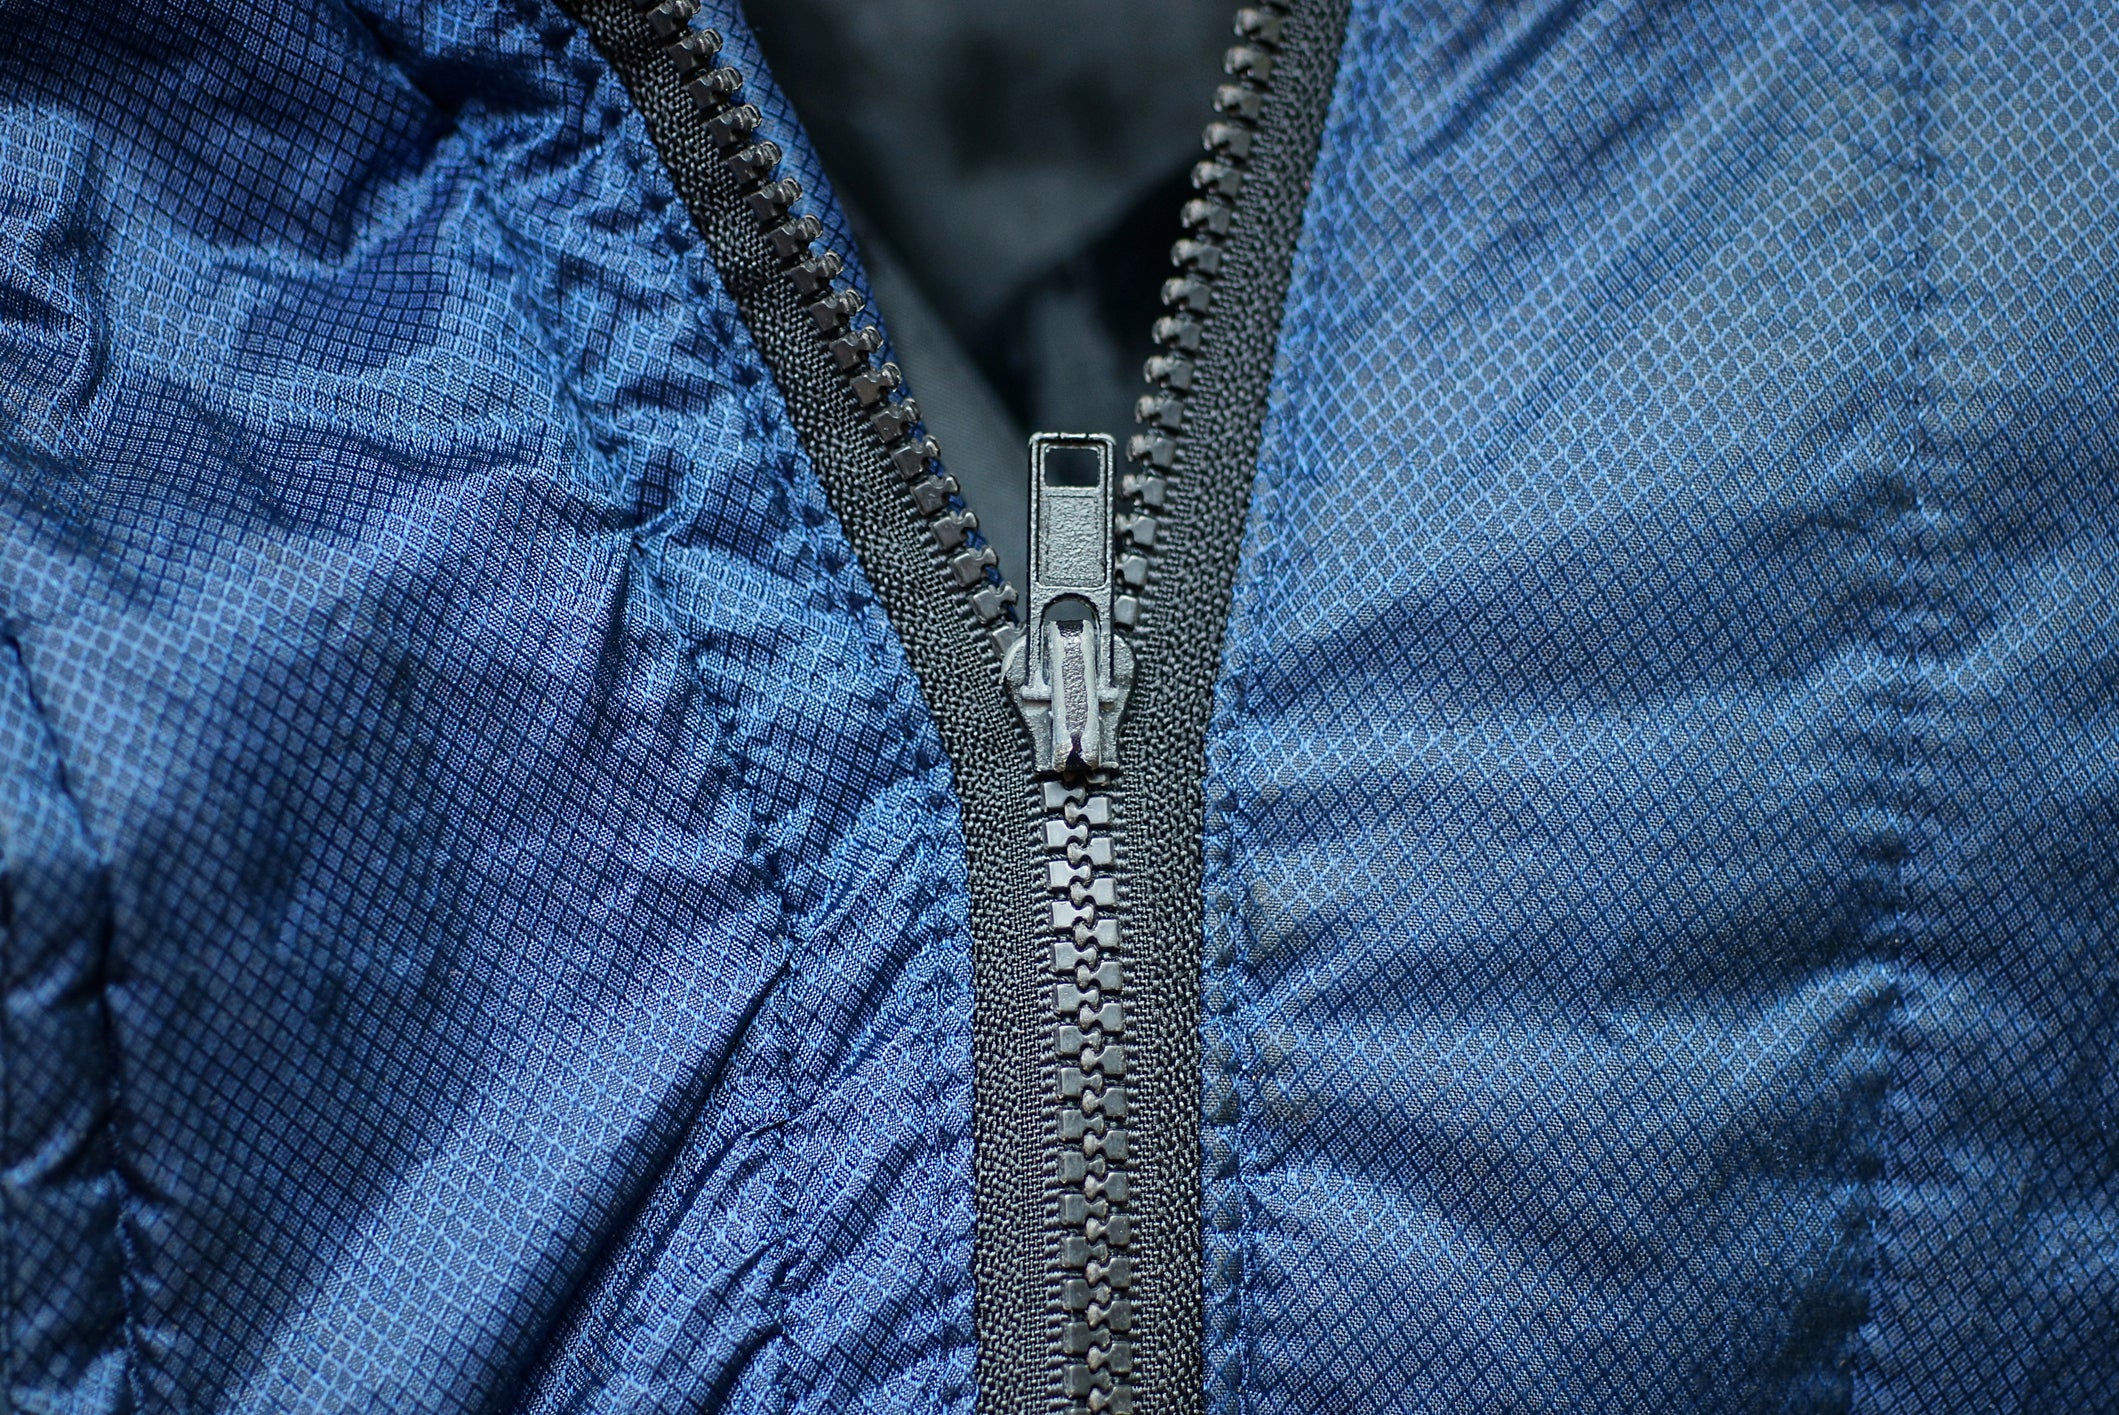 Jacket Zippers